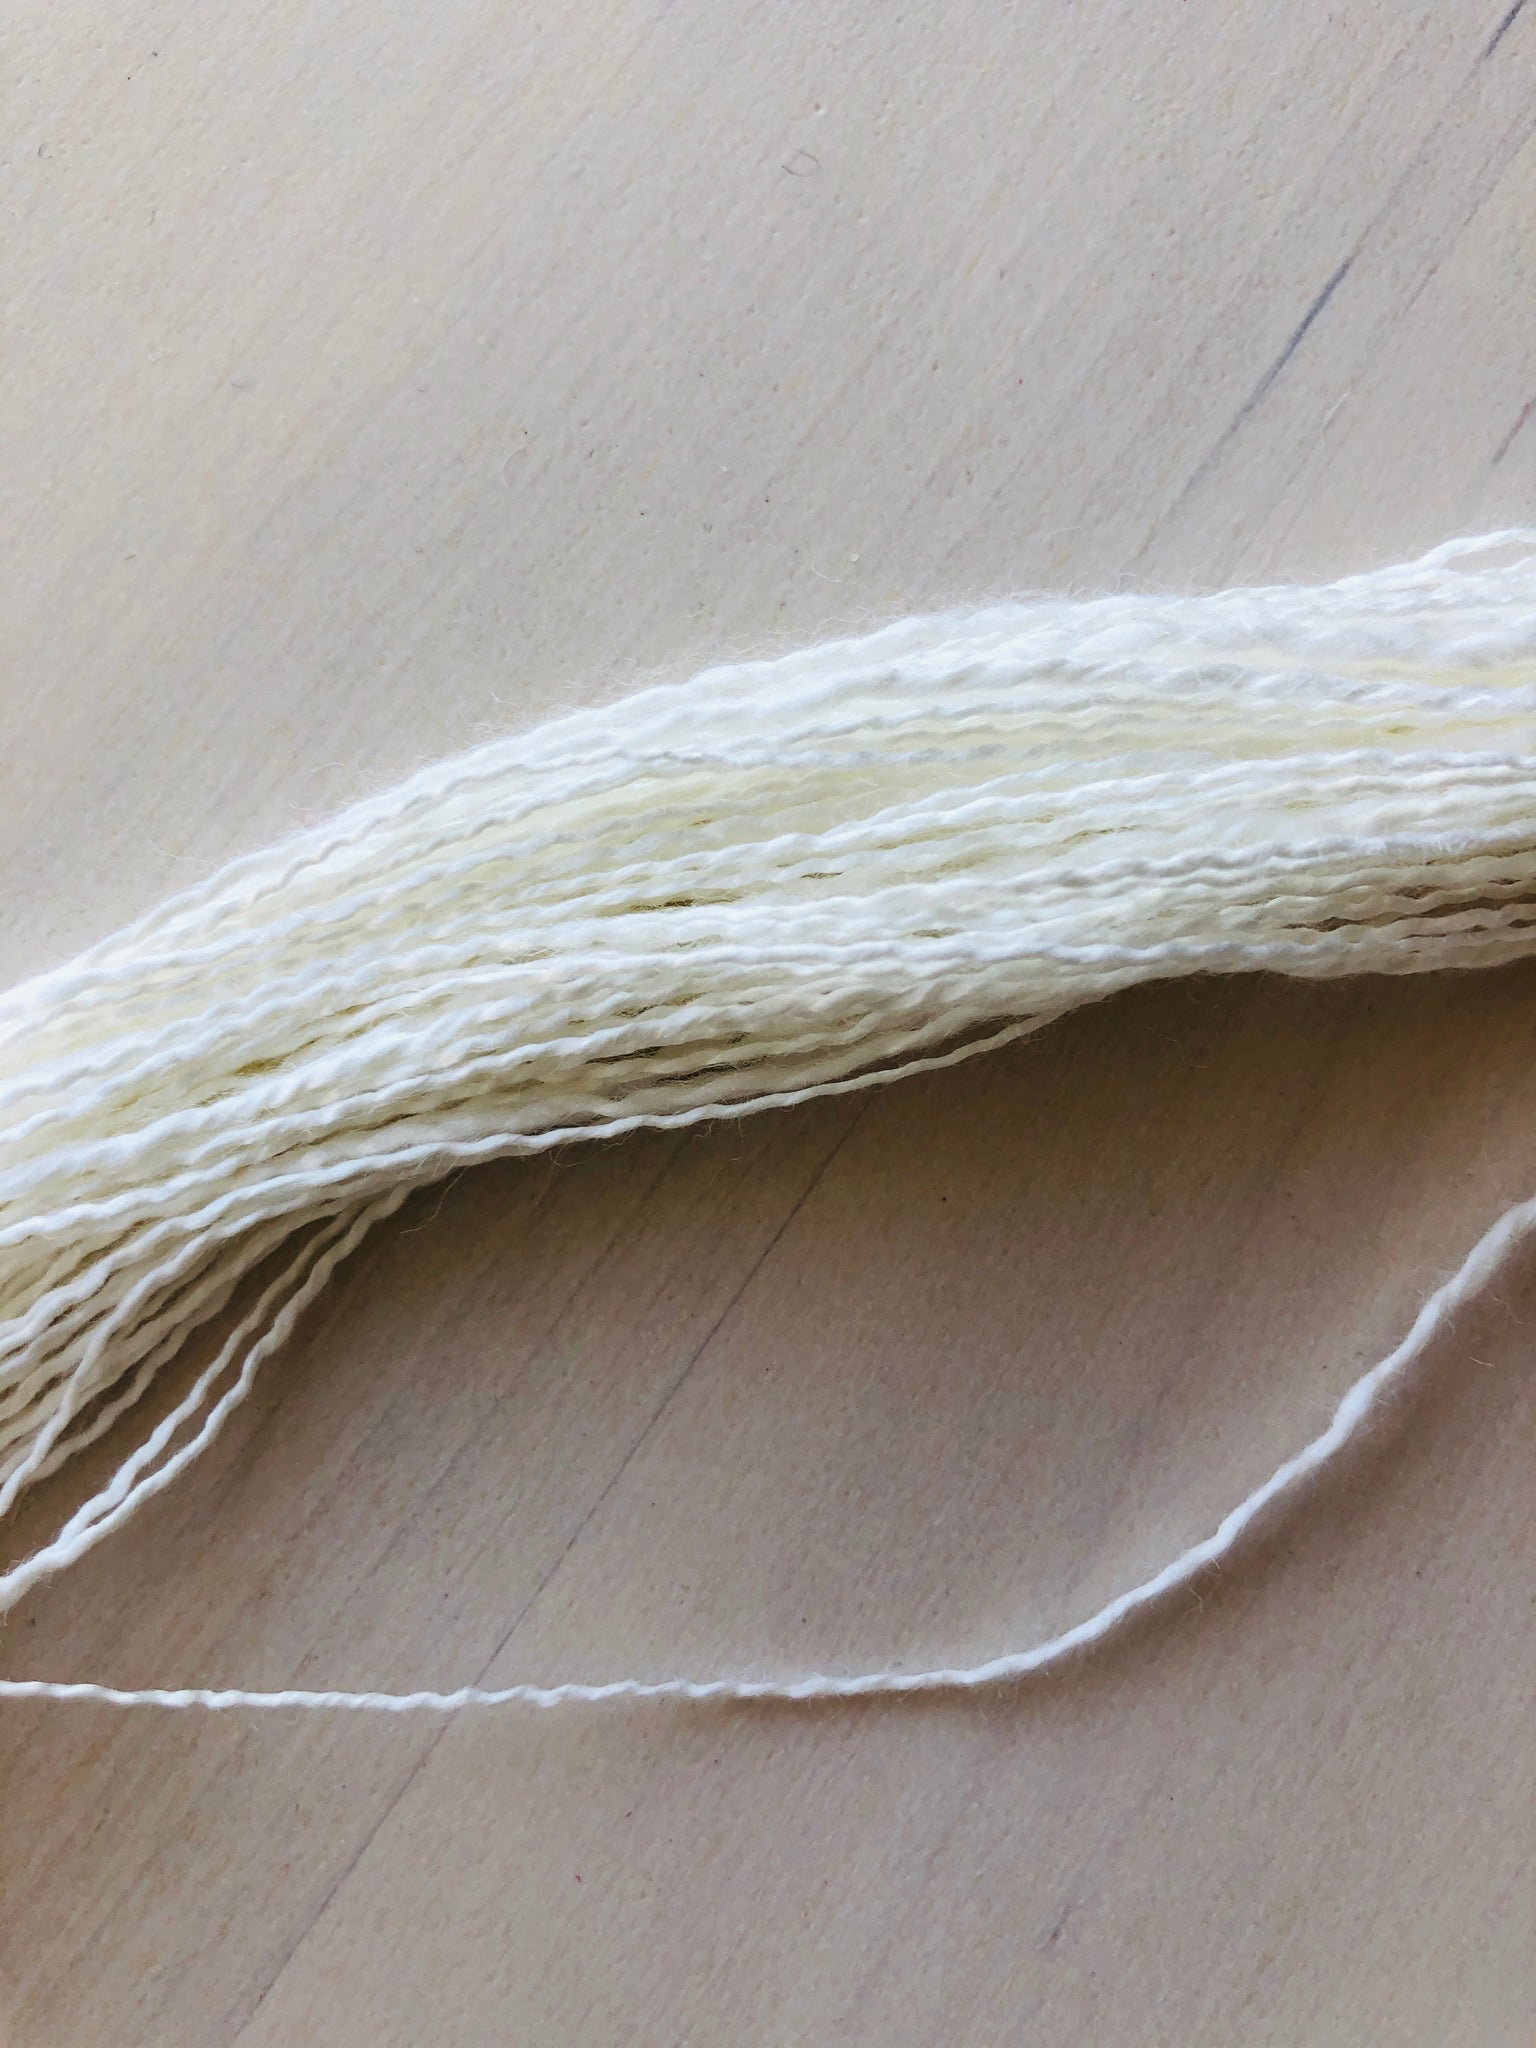 Wholesale dk yarns, Cotton, Polyester, Acrylic, Wool, Rayon & More 